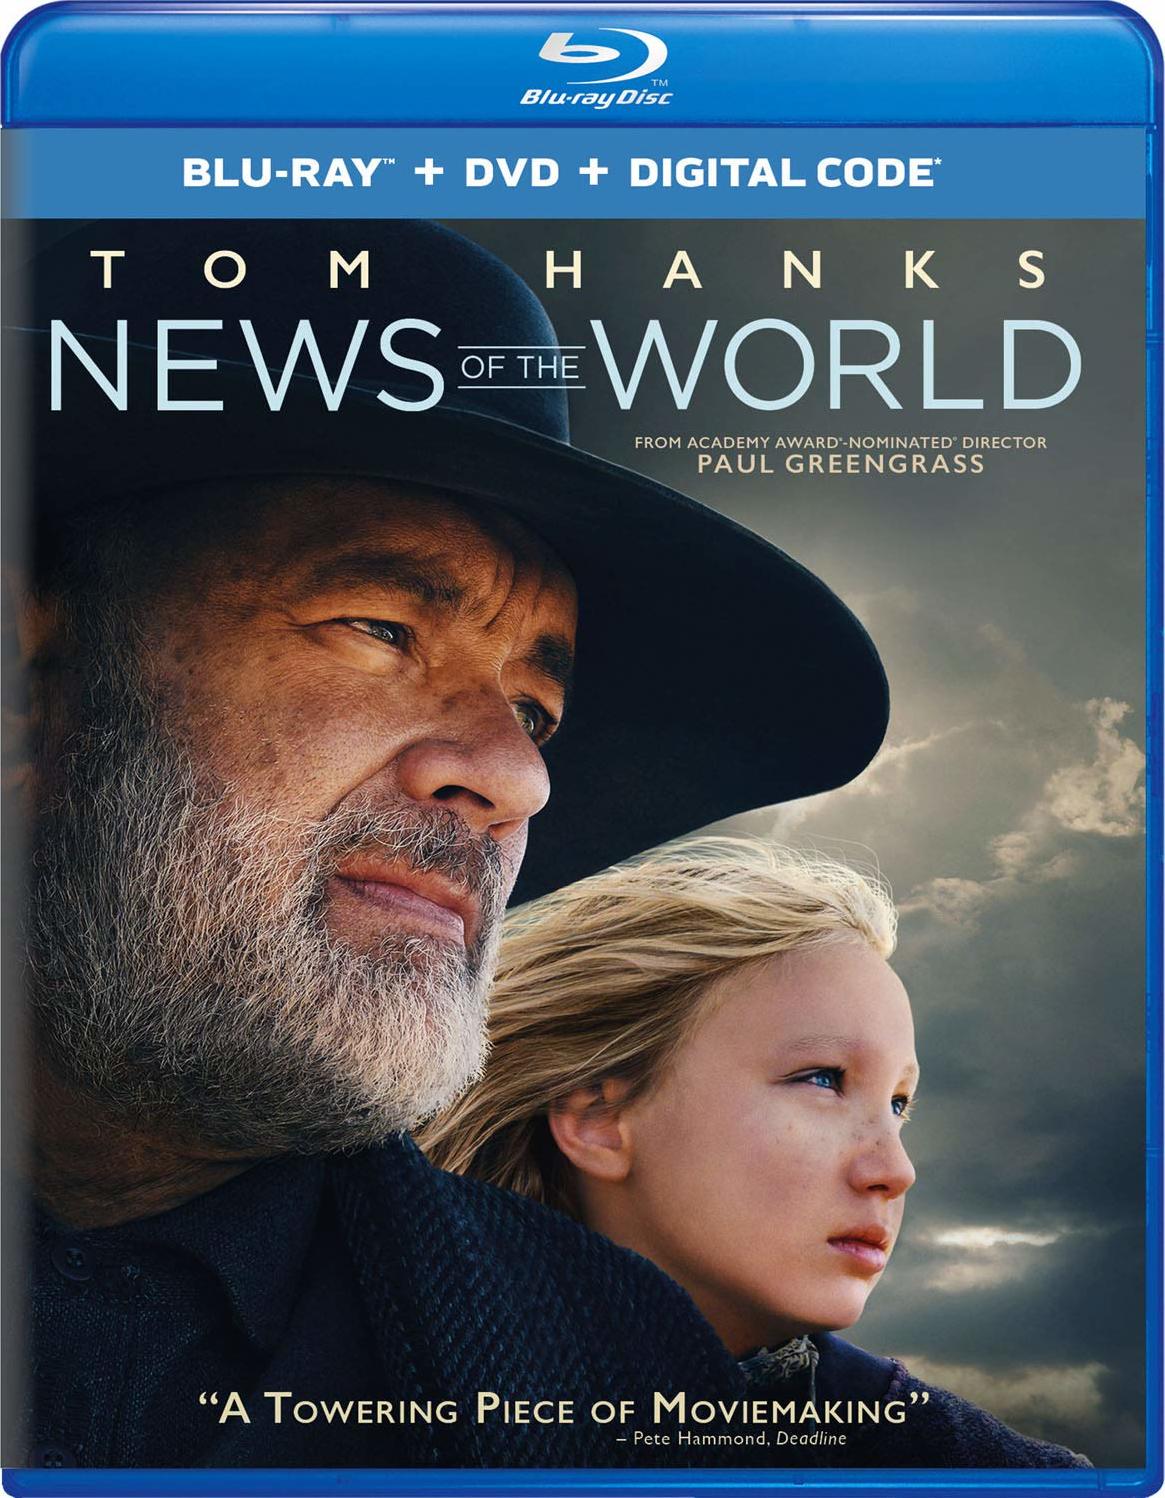 world - News of the World (2020) Noticias del Mundo (2020) [AC3 5.1 + SUP] [Blu Ray]  283526_front